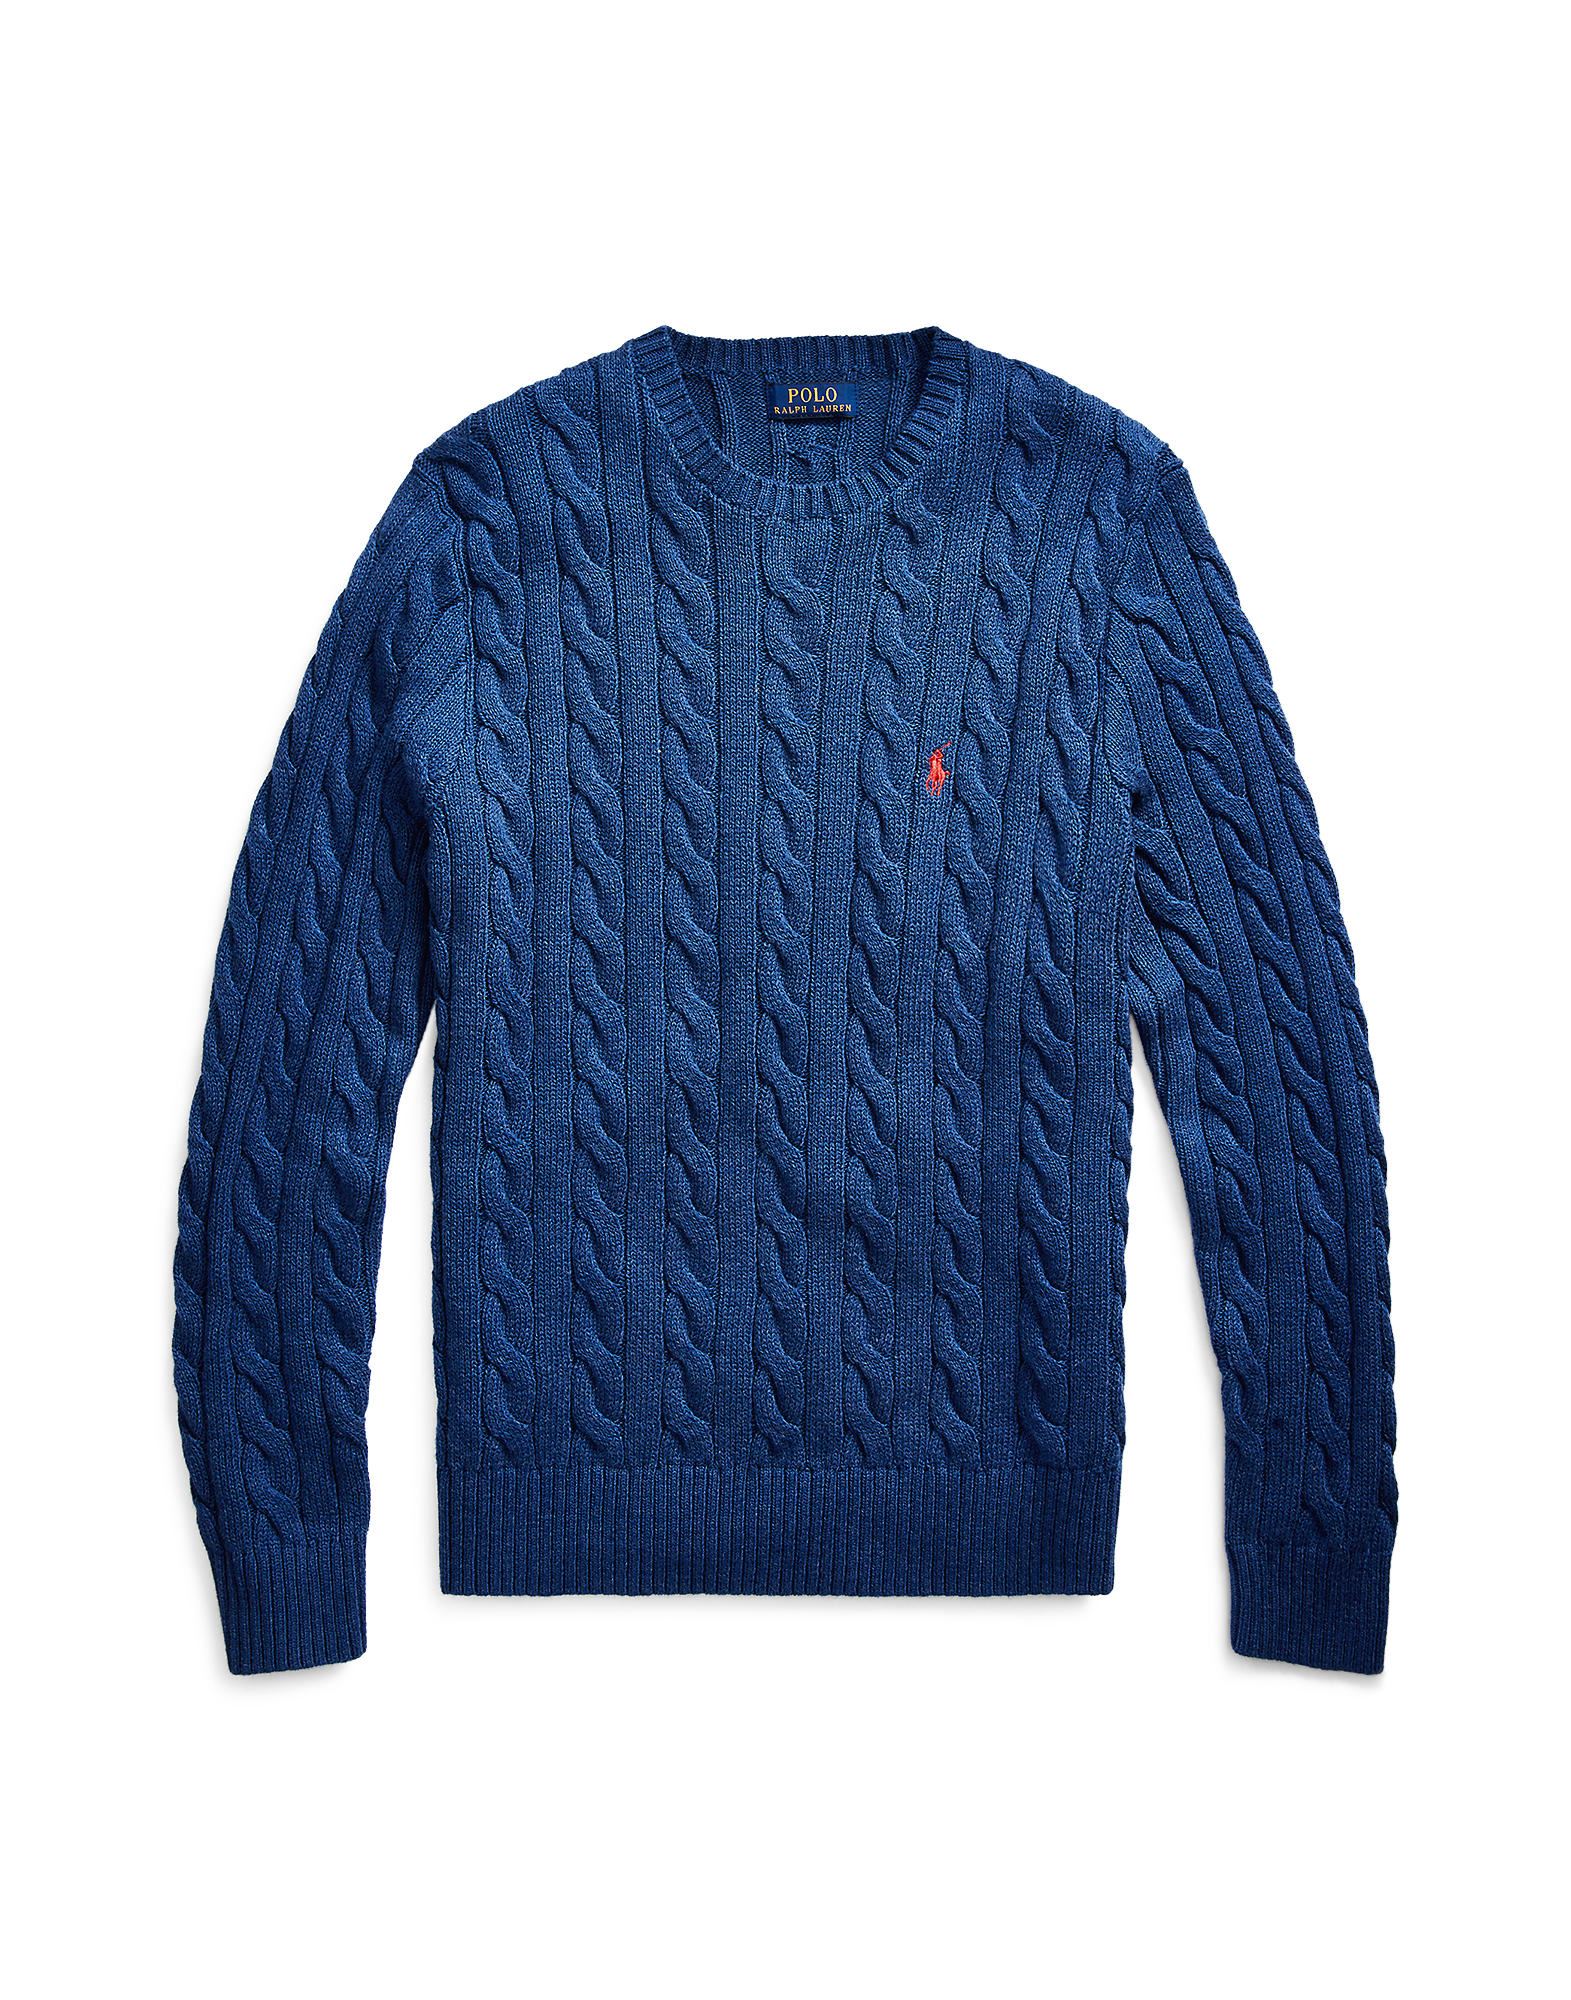 Polo Ralph Lauren Sweaters In Navy Blue